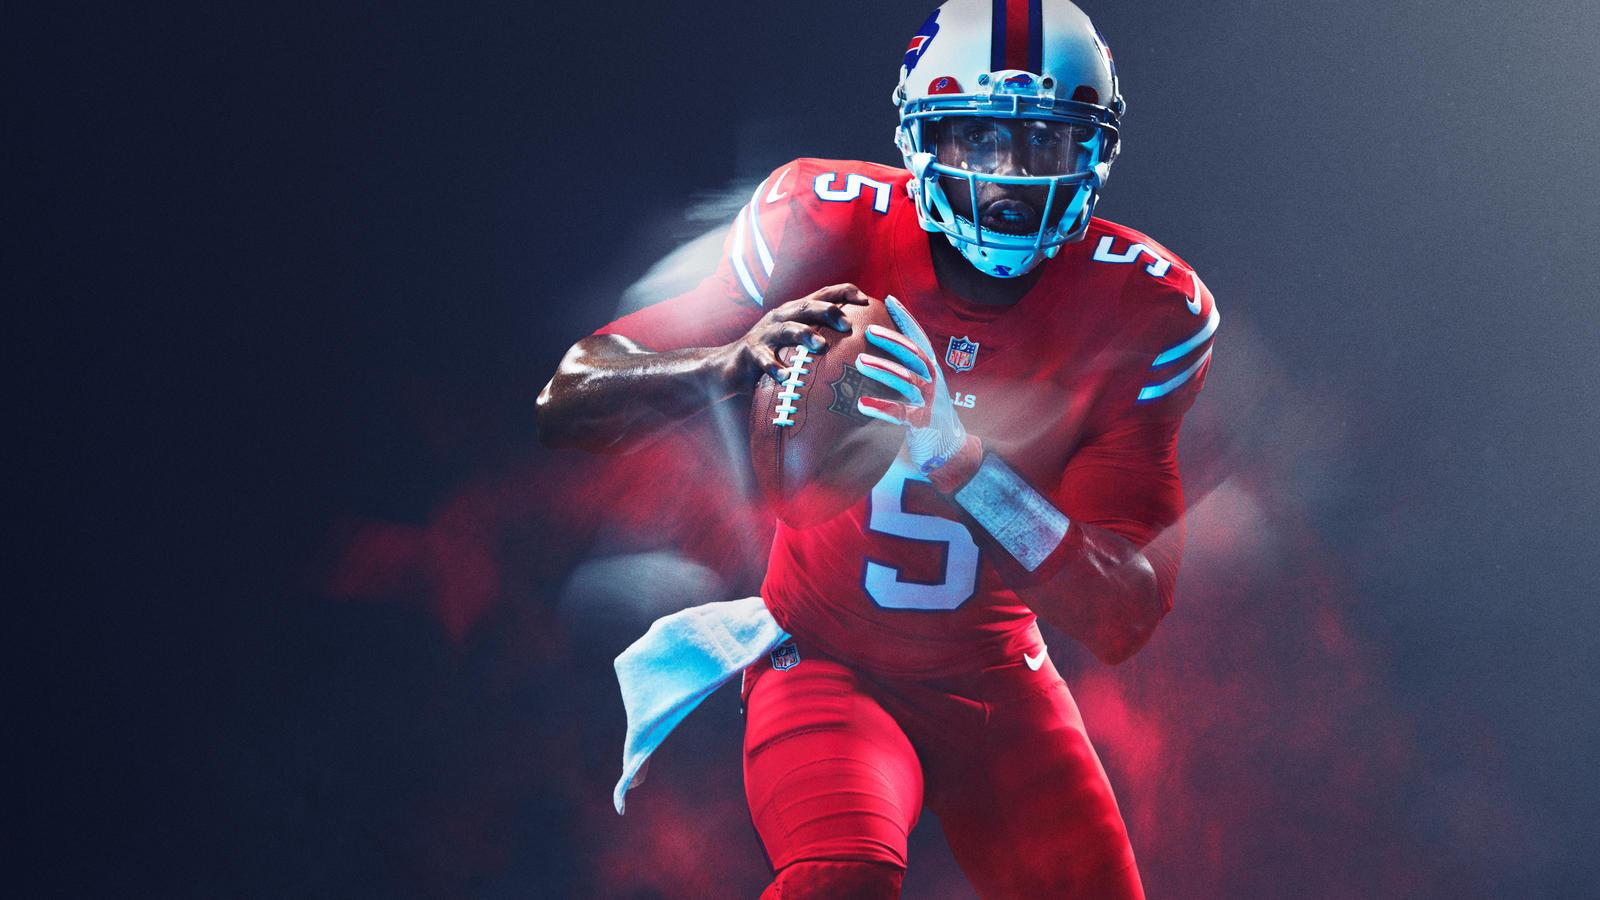 Nike and NFL Light Up Thursday Night Football